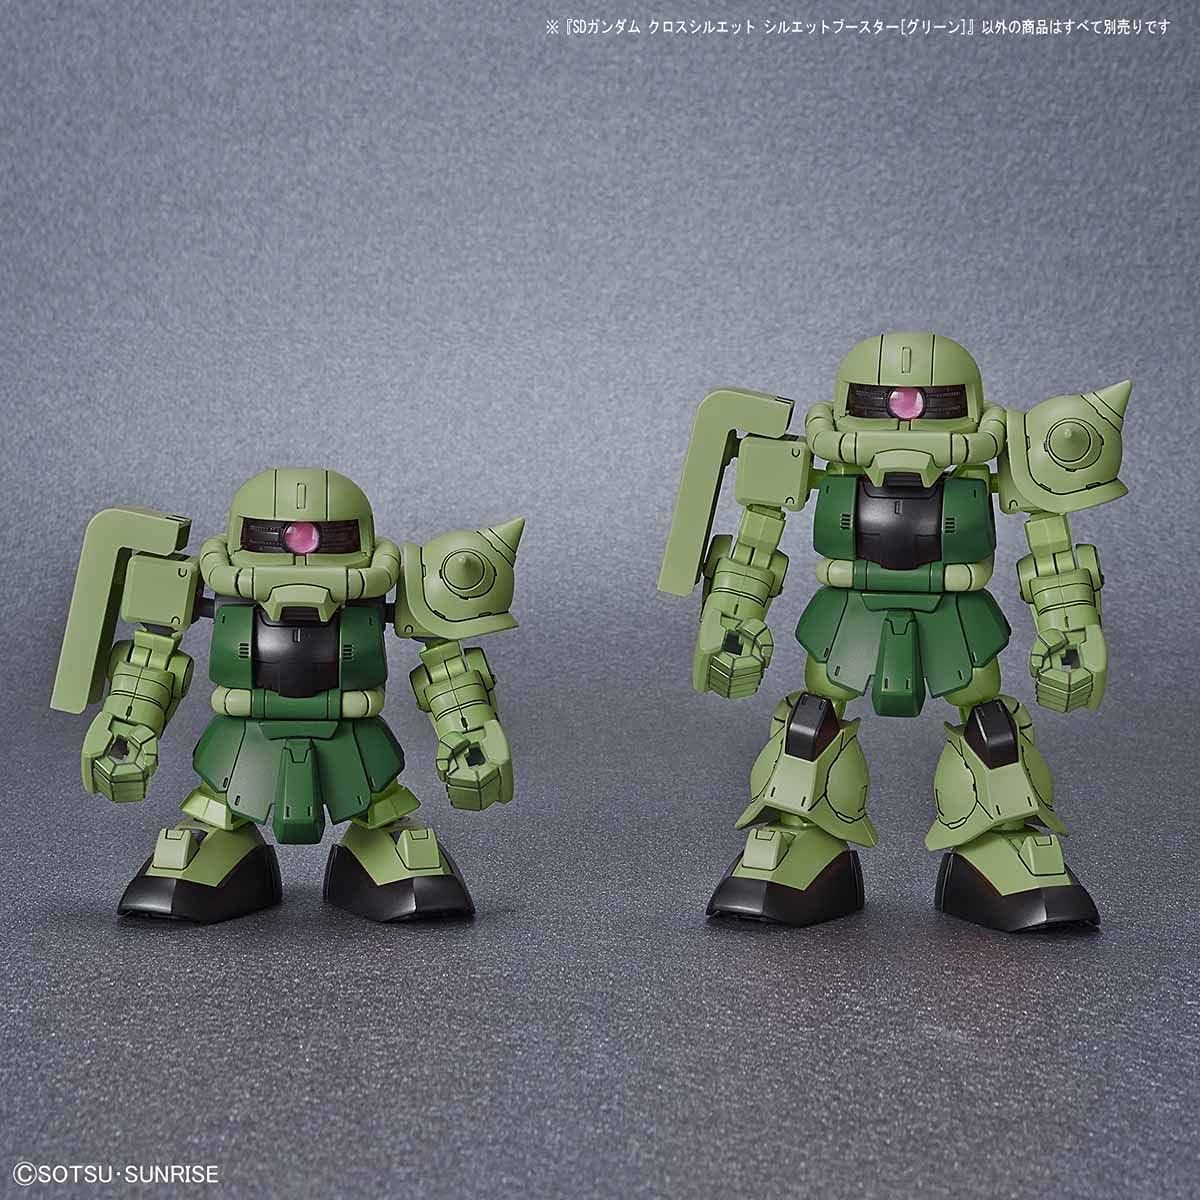 SD Gundam Cross Silhouette SDCS Silhouette Booster Green | animota